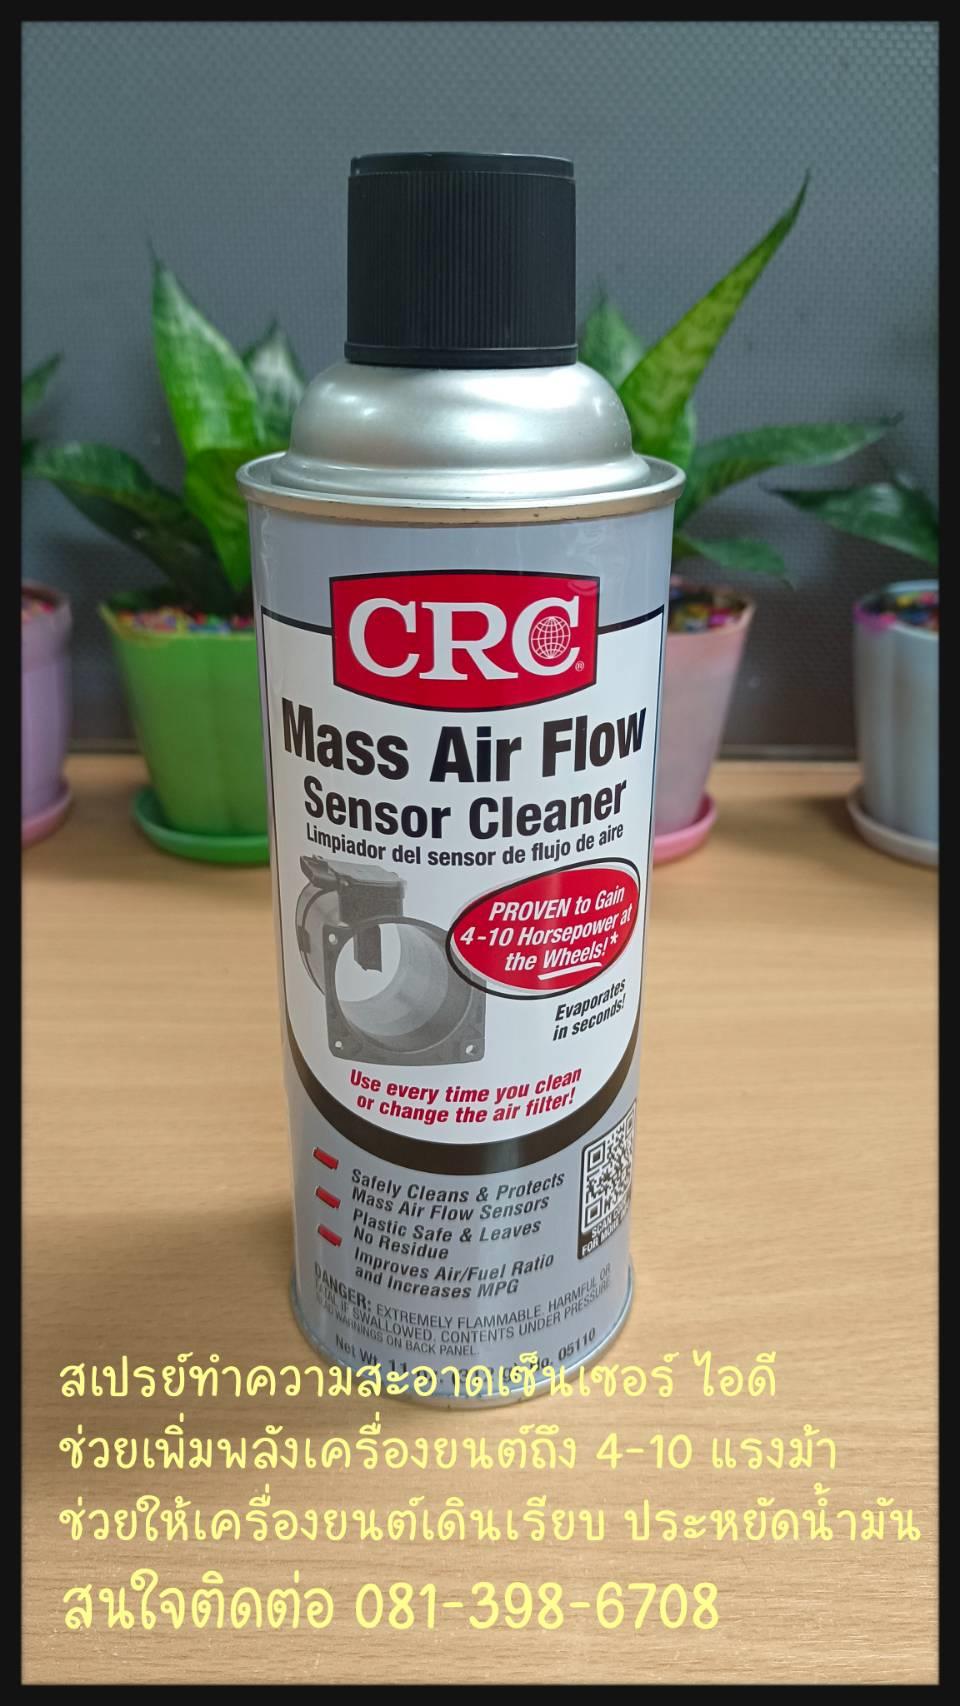 MASS AIR FLOW SENSOR CLEANER สเปรย์ทำความสะอาดเซ็นเซอร์ไอดี,AIR FLOW ,เซ็นเซอร์ไอดี,AIR FLOW SENSOR,Tool and Tooling/Tooling